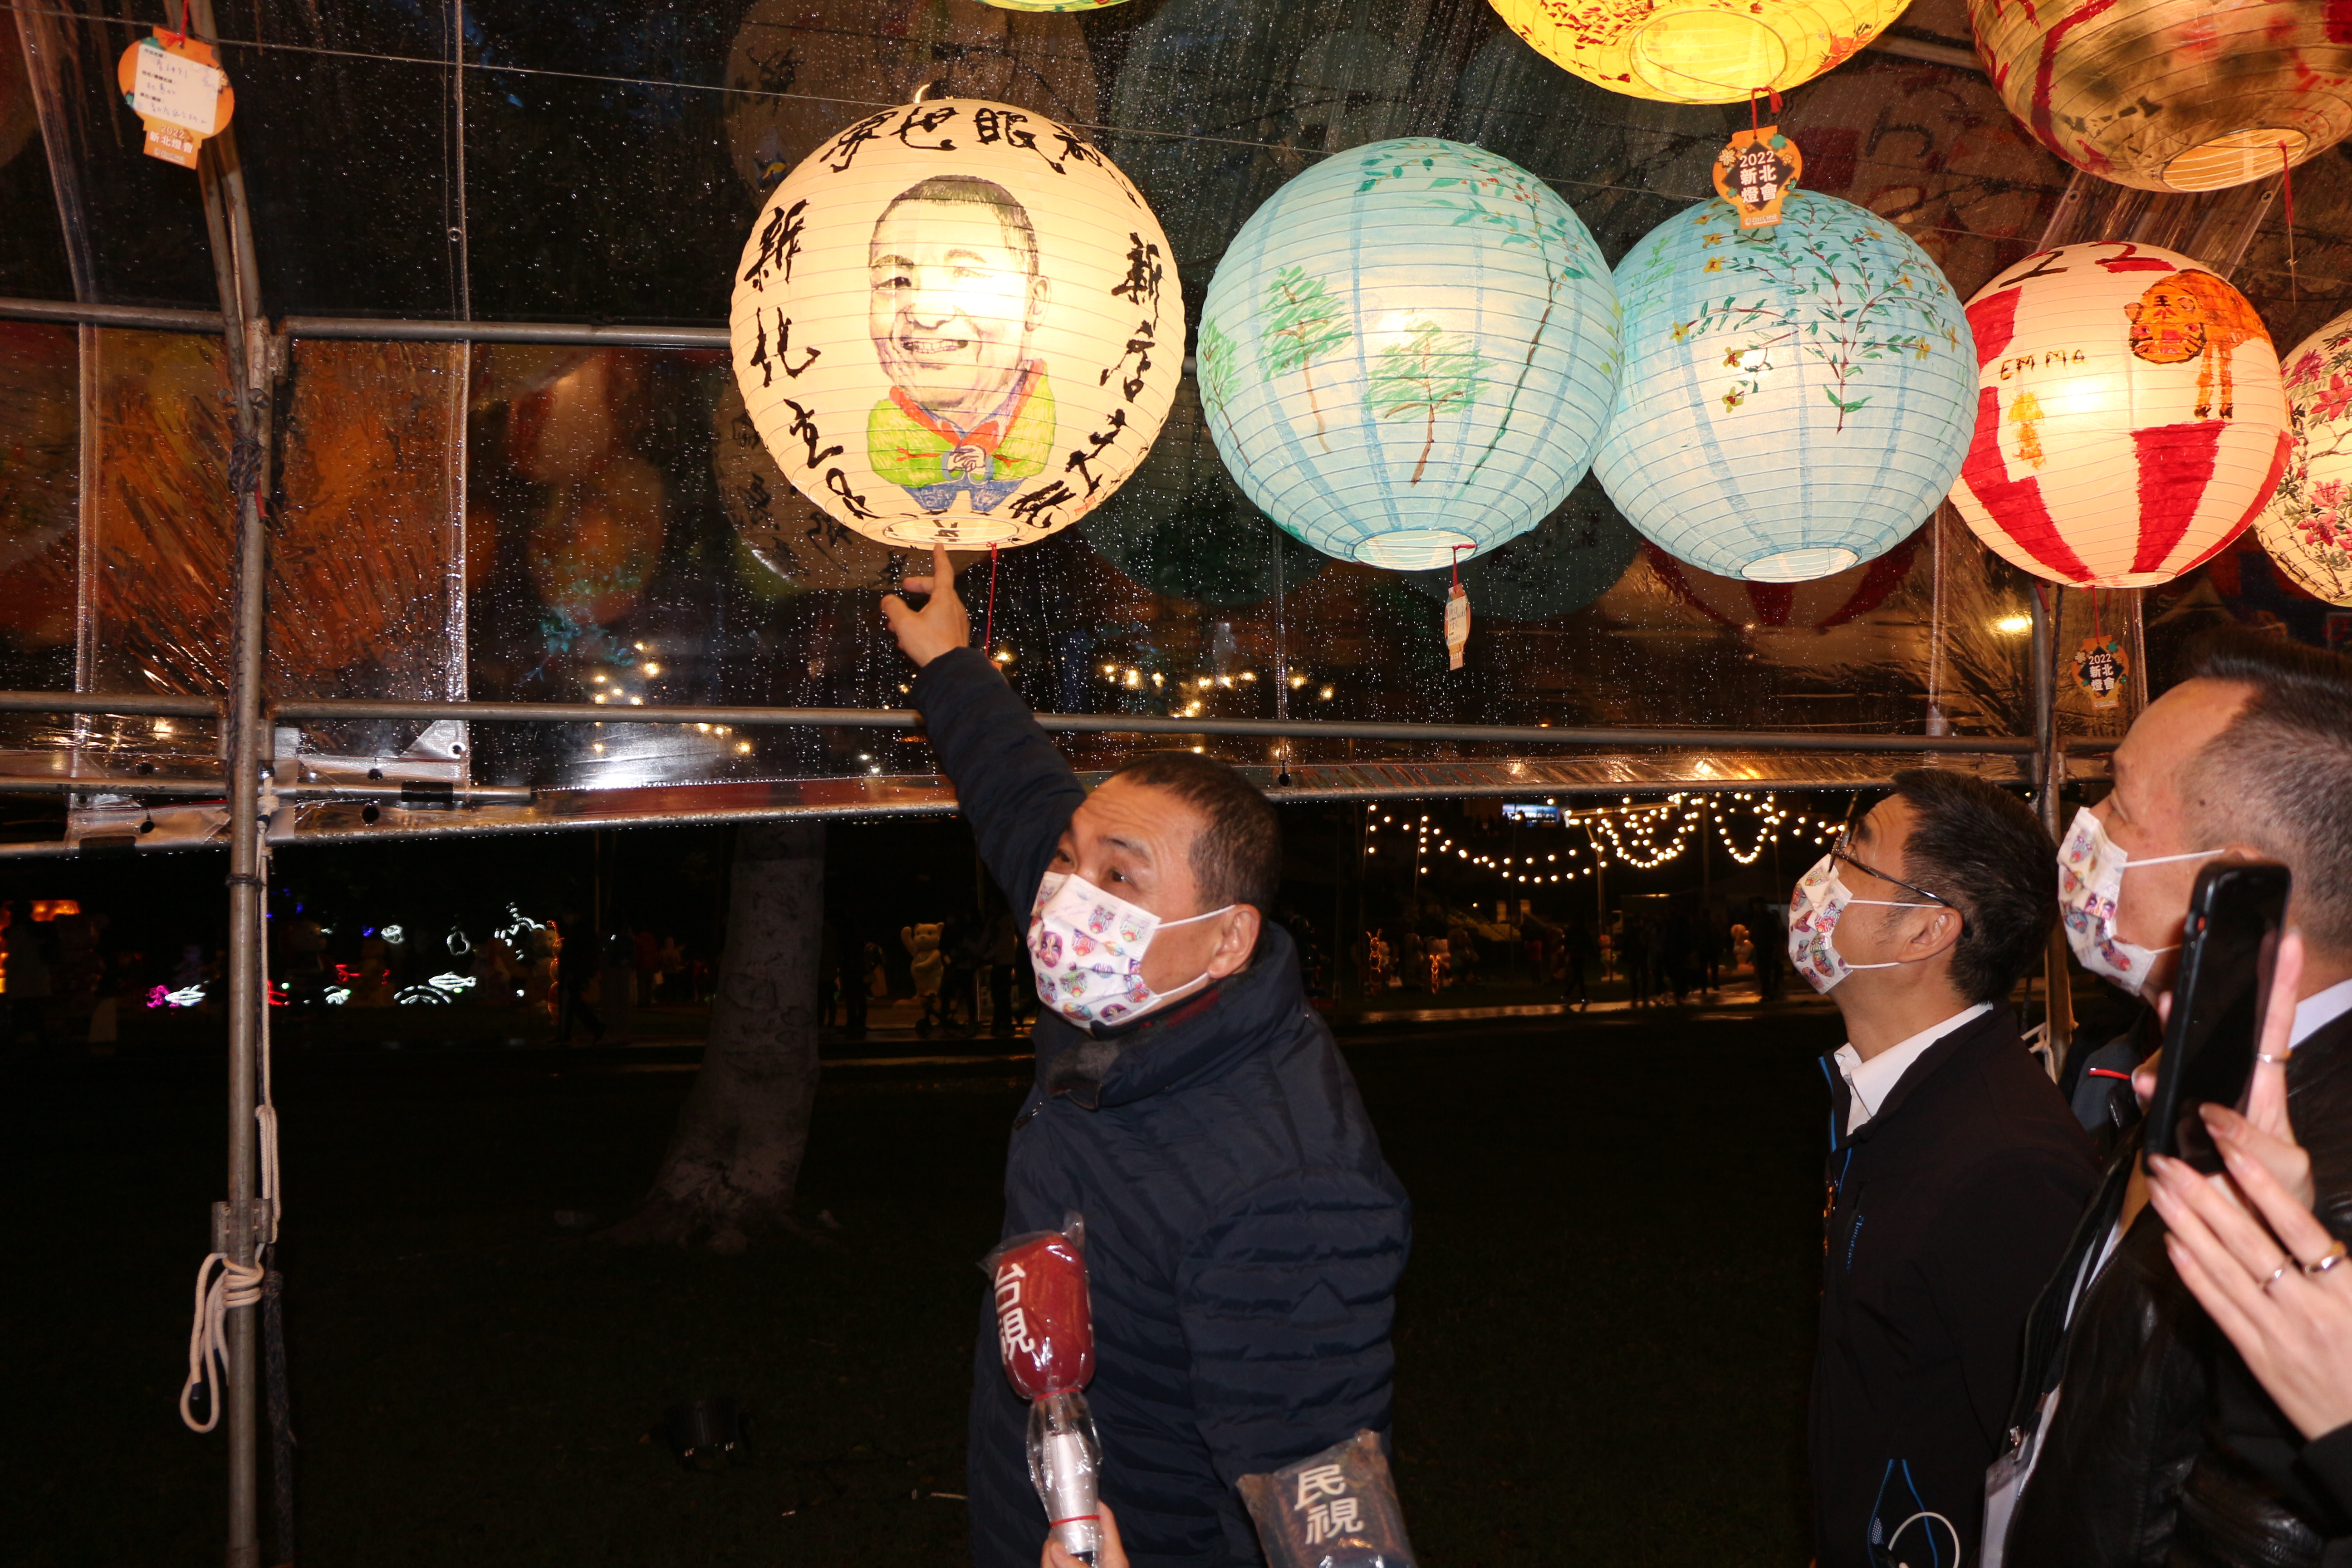 The main theme of the lantern festival is “Lantern Theater”. (Photo / Provided by New Taipei City Civil Affairs Bureau)